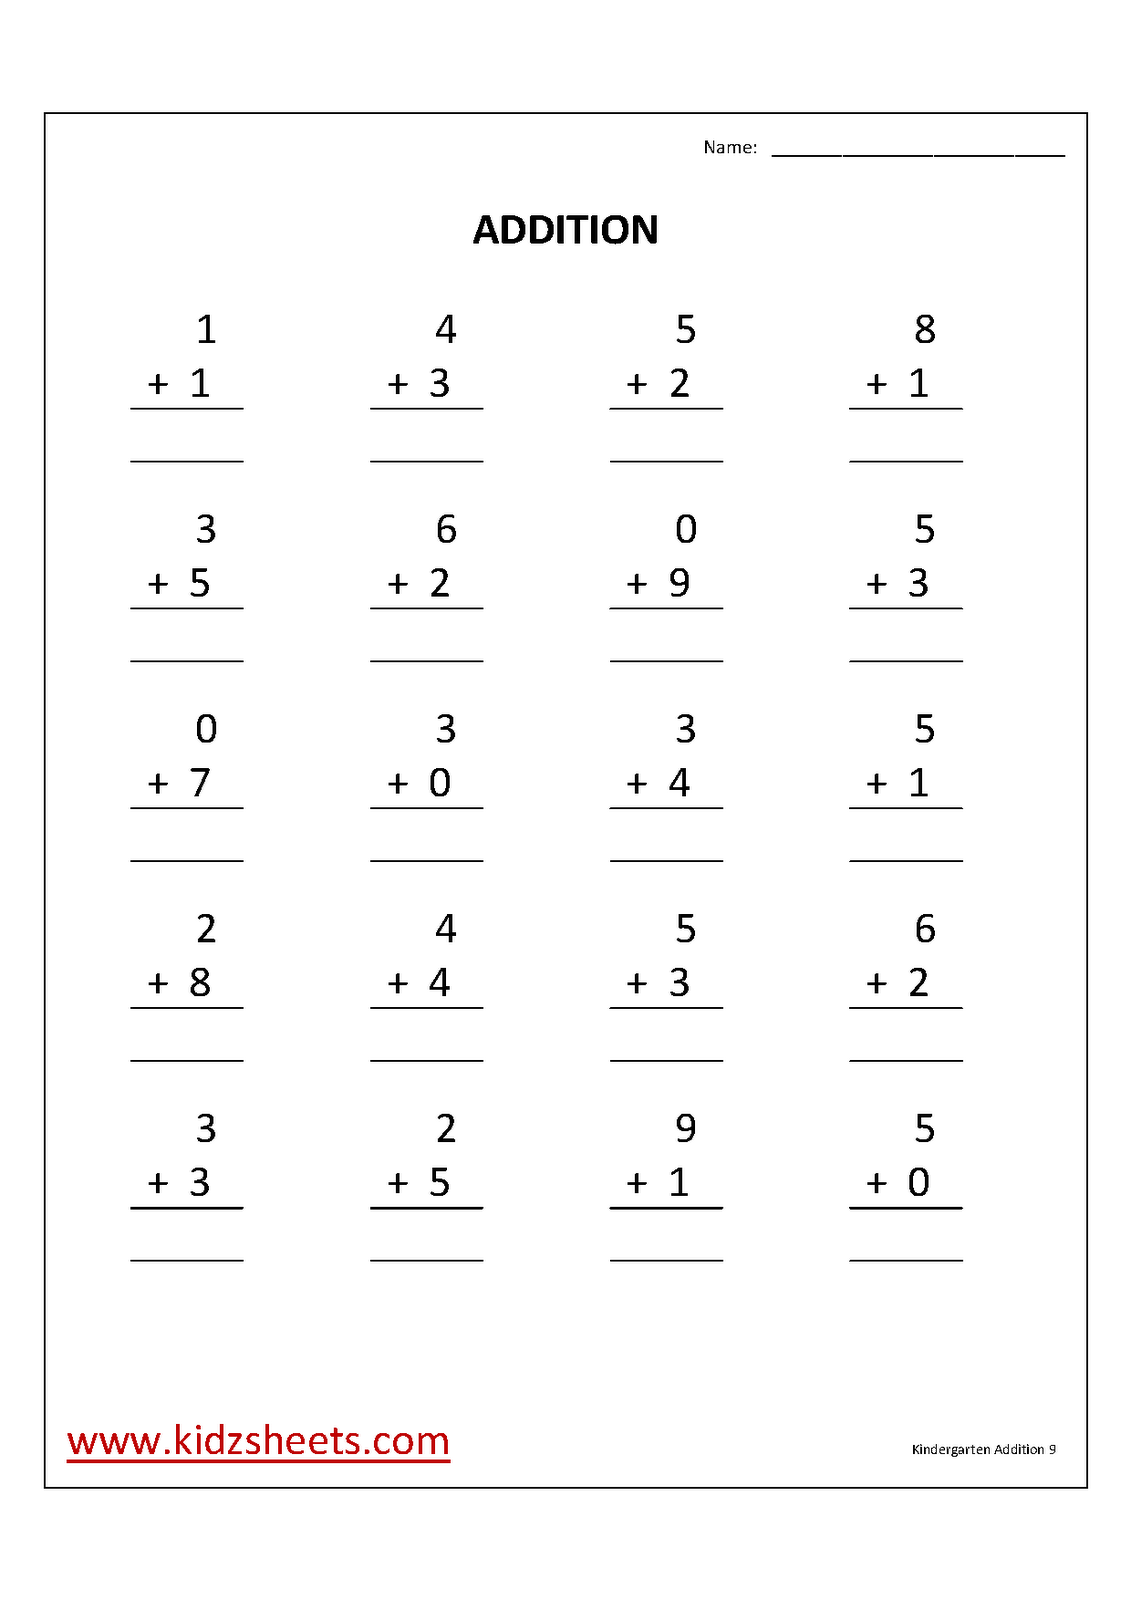 433 New kindergarten addition worksheet printable 71   Worksheets, Maths Worksheets, Kindergarten Addition, Addition 